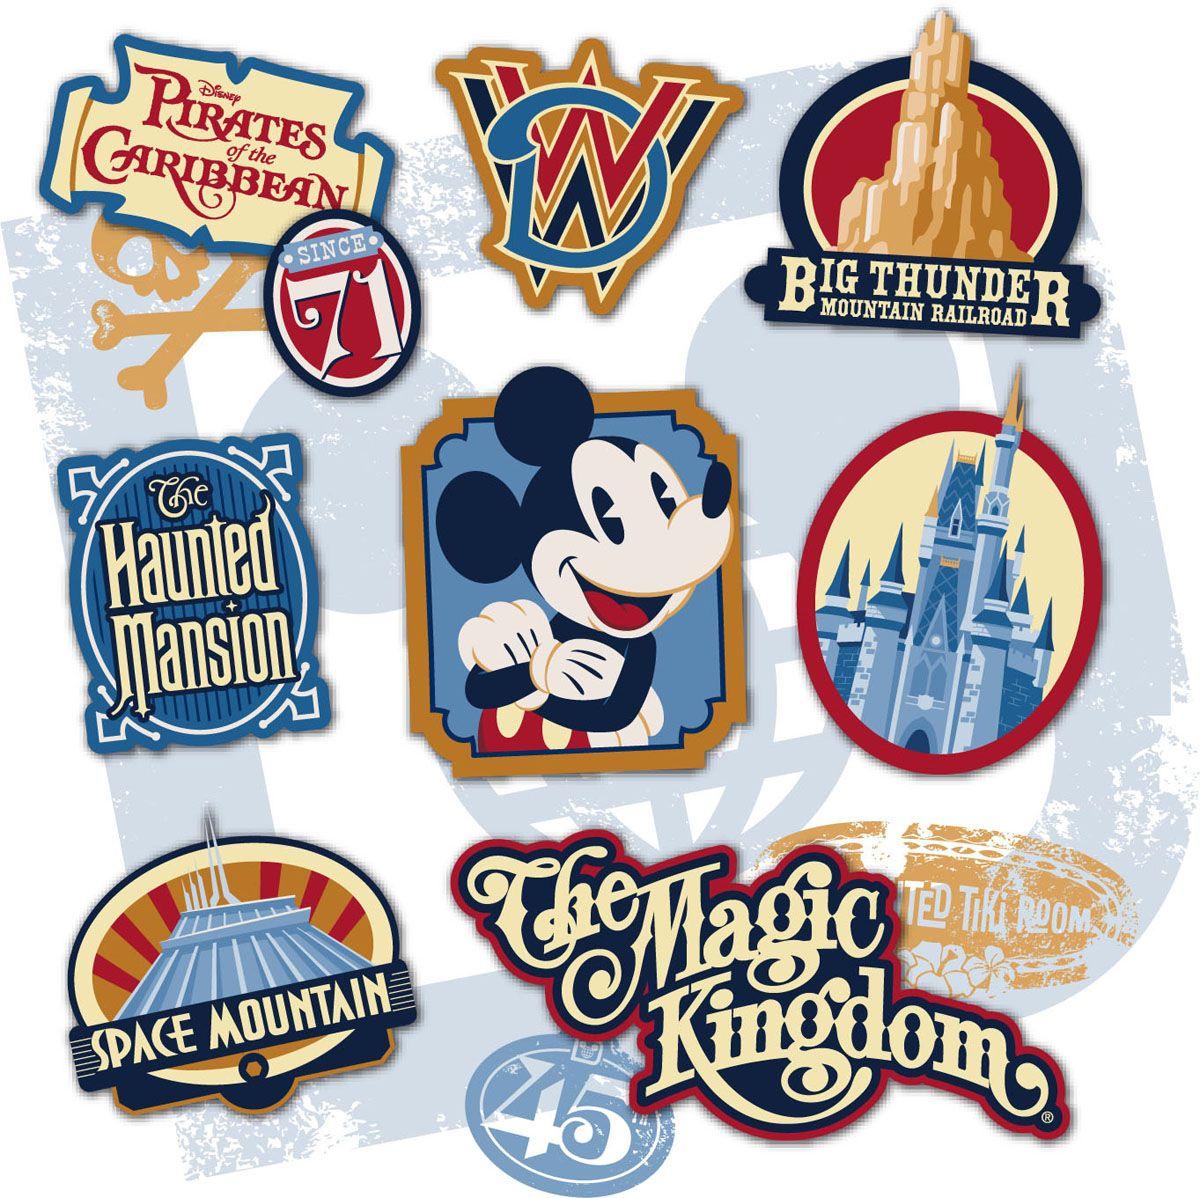 Disney World 2017 Logo - First Look at Magic Kingdom 45th Anniversary Merchandise Artwork ...